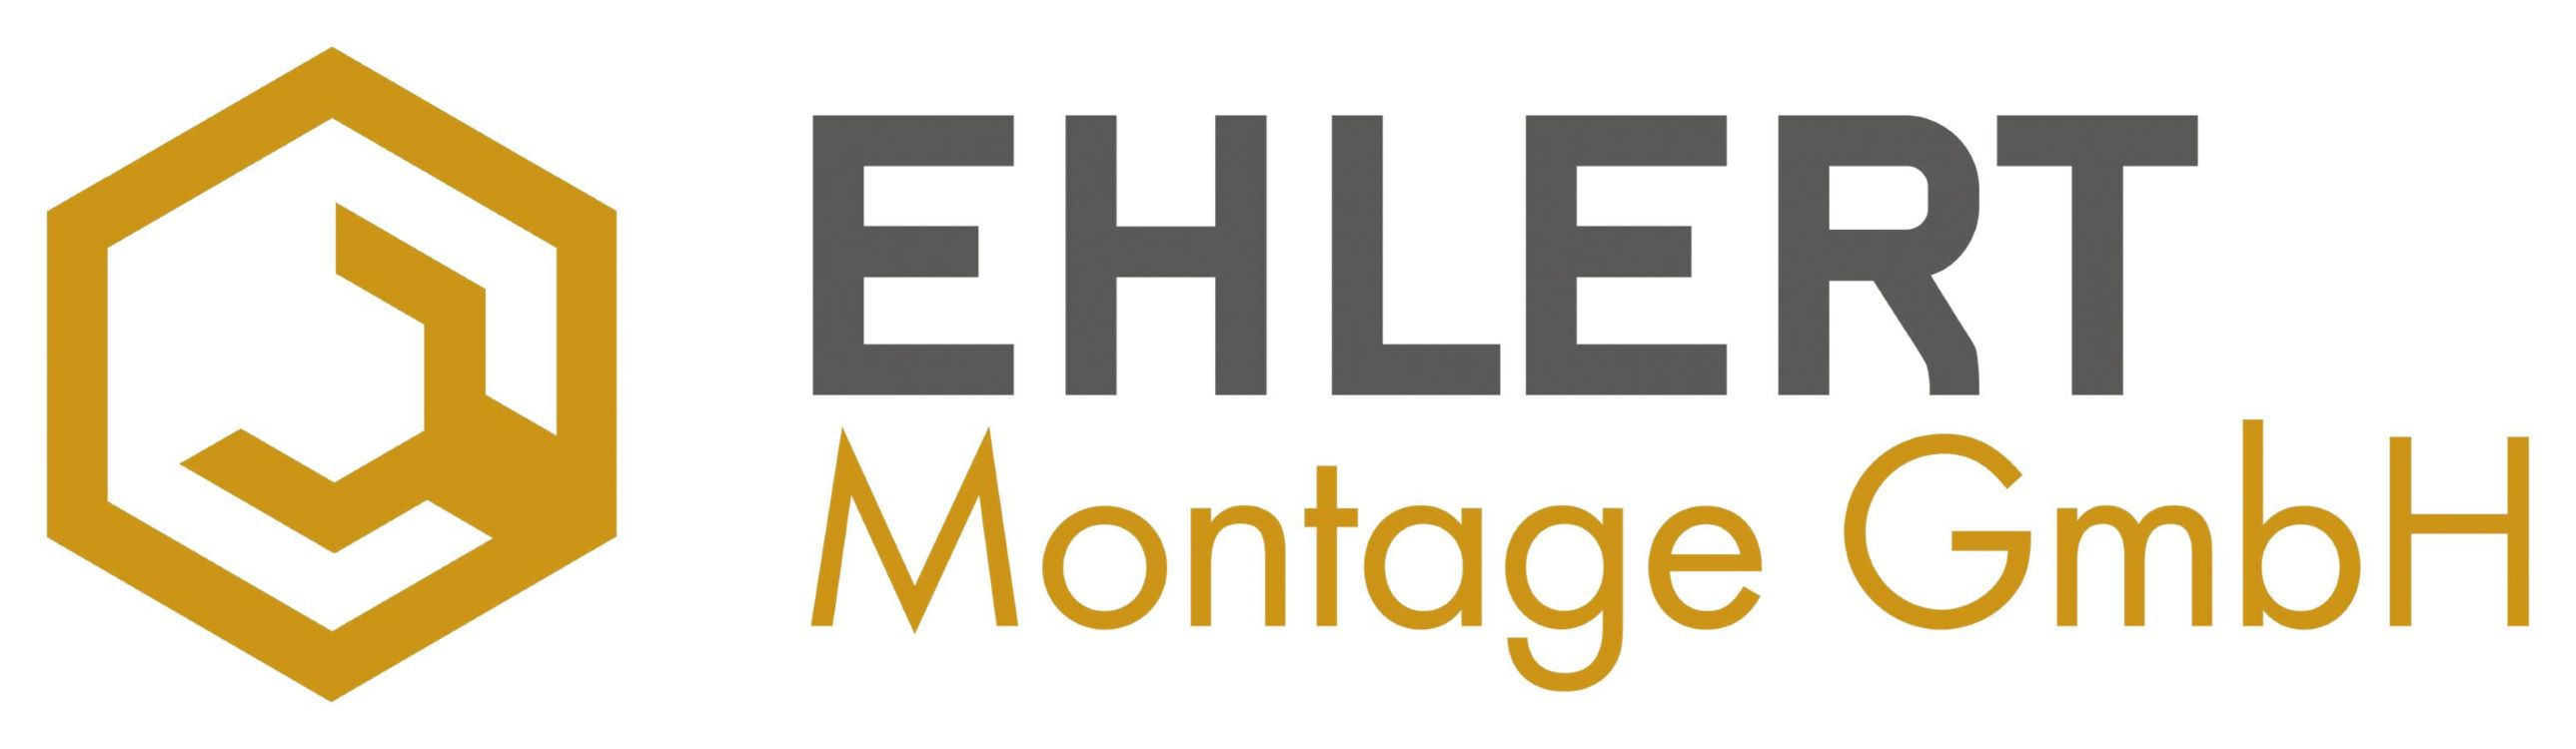 Ehlert Montage GmbH